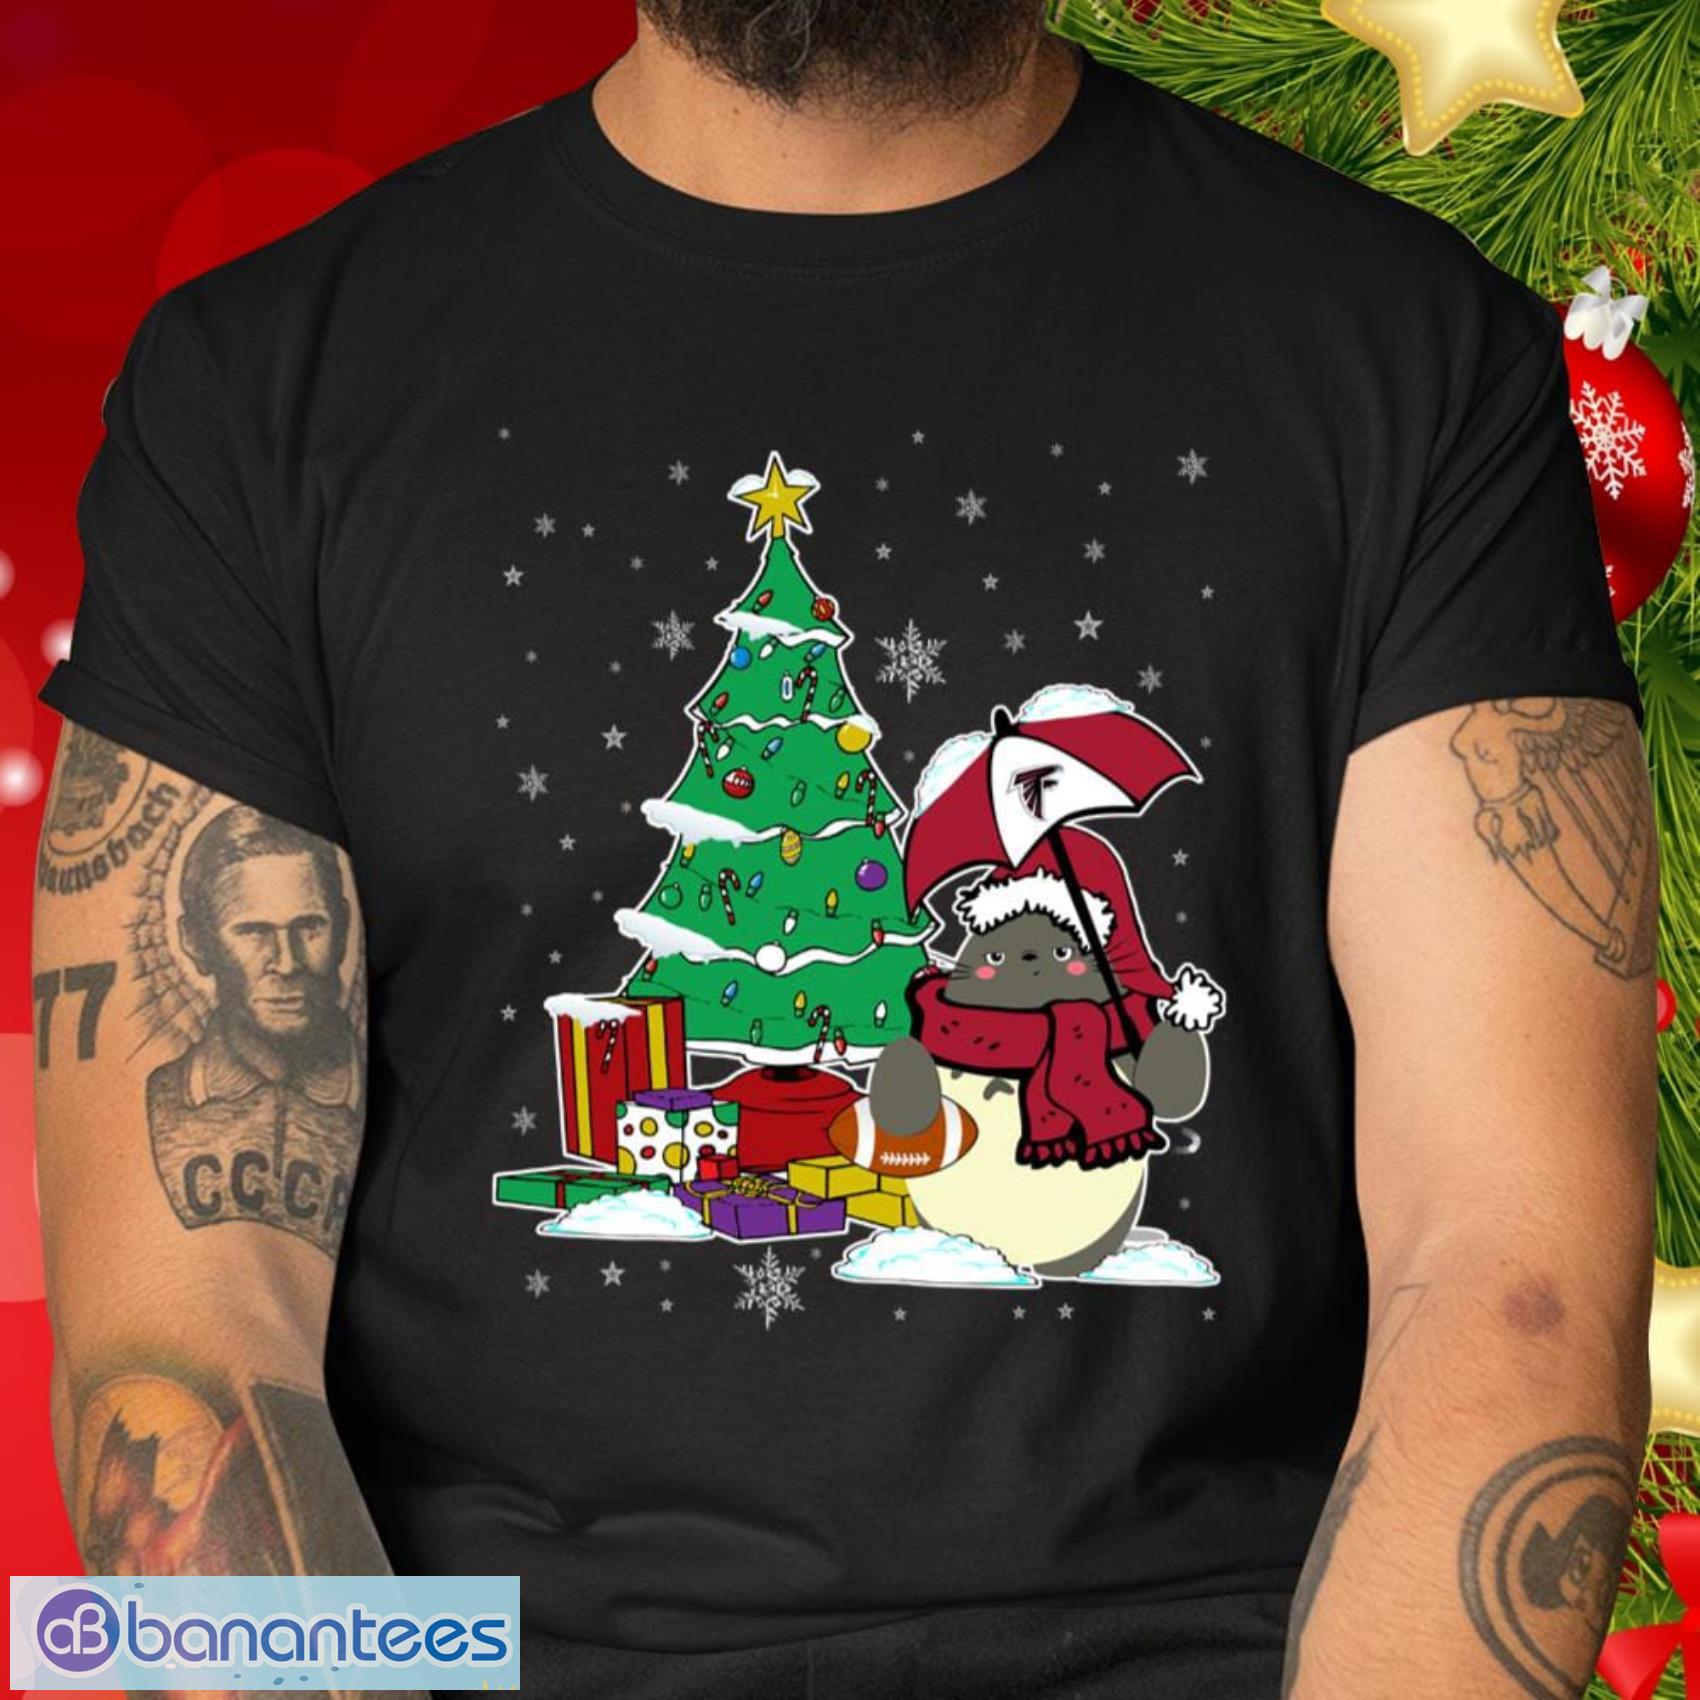 Atlanta Falcons NFL Football Gift Fr Fans Cute Tonari No Totoro Christmas Sports T Shirt - Atlanta Falcons NFL Football Cute Tonari No Totoro Christmas Sports T Shirt_1